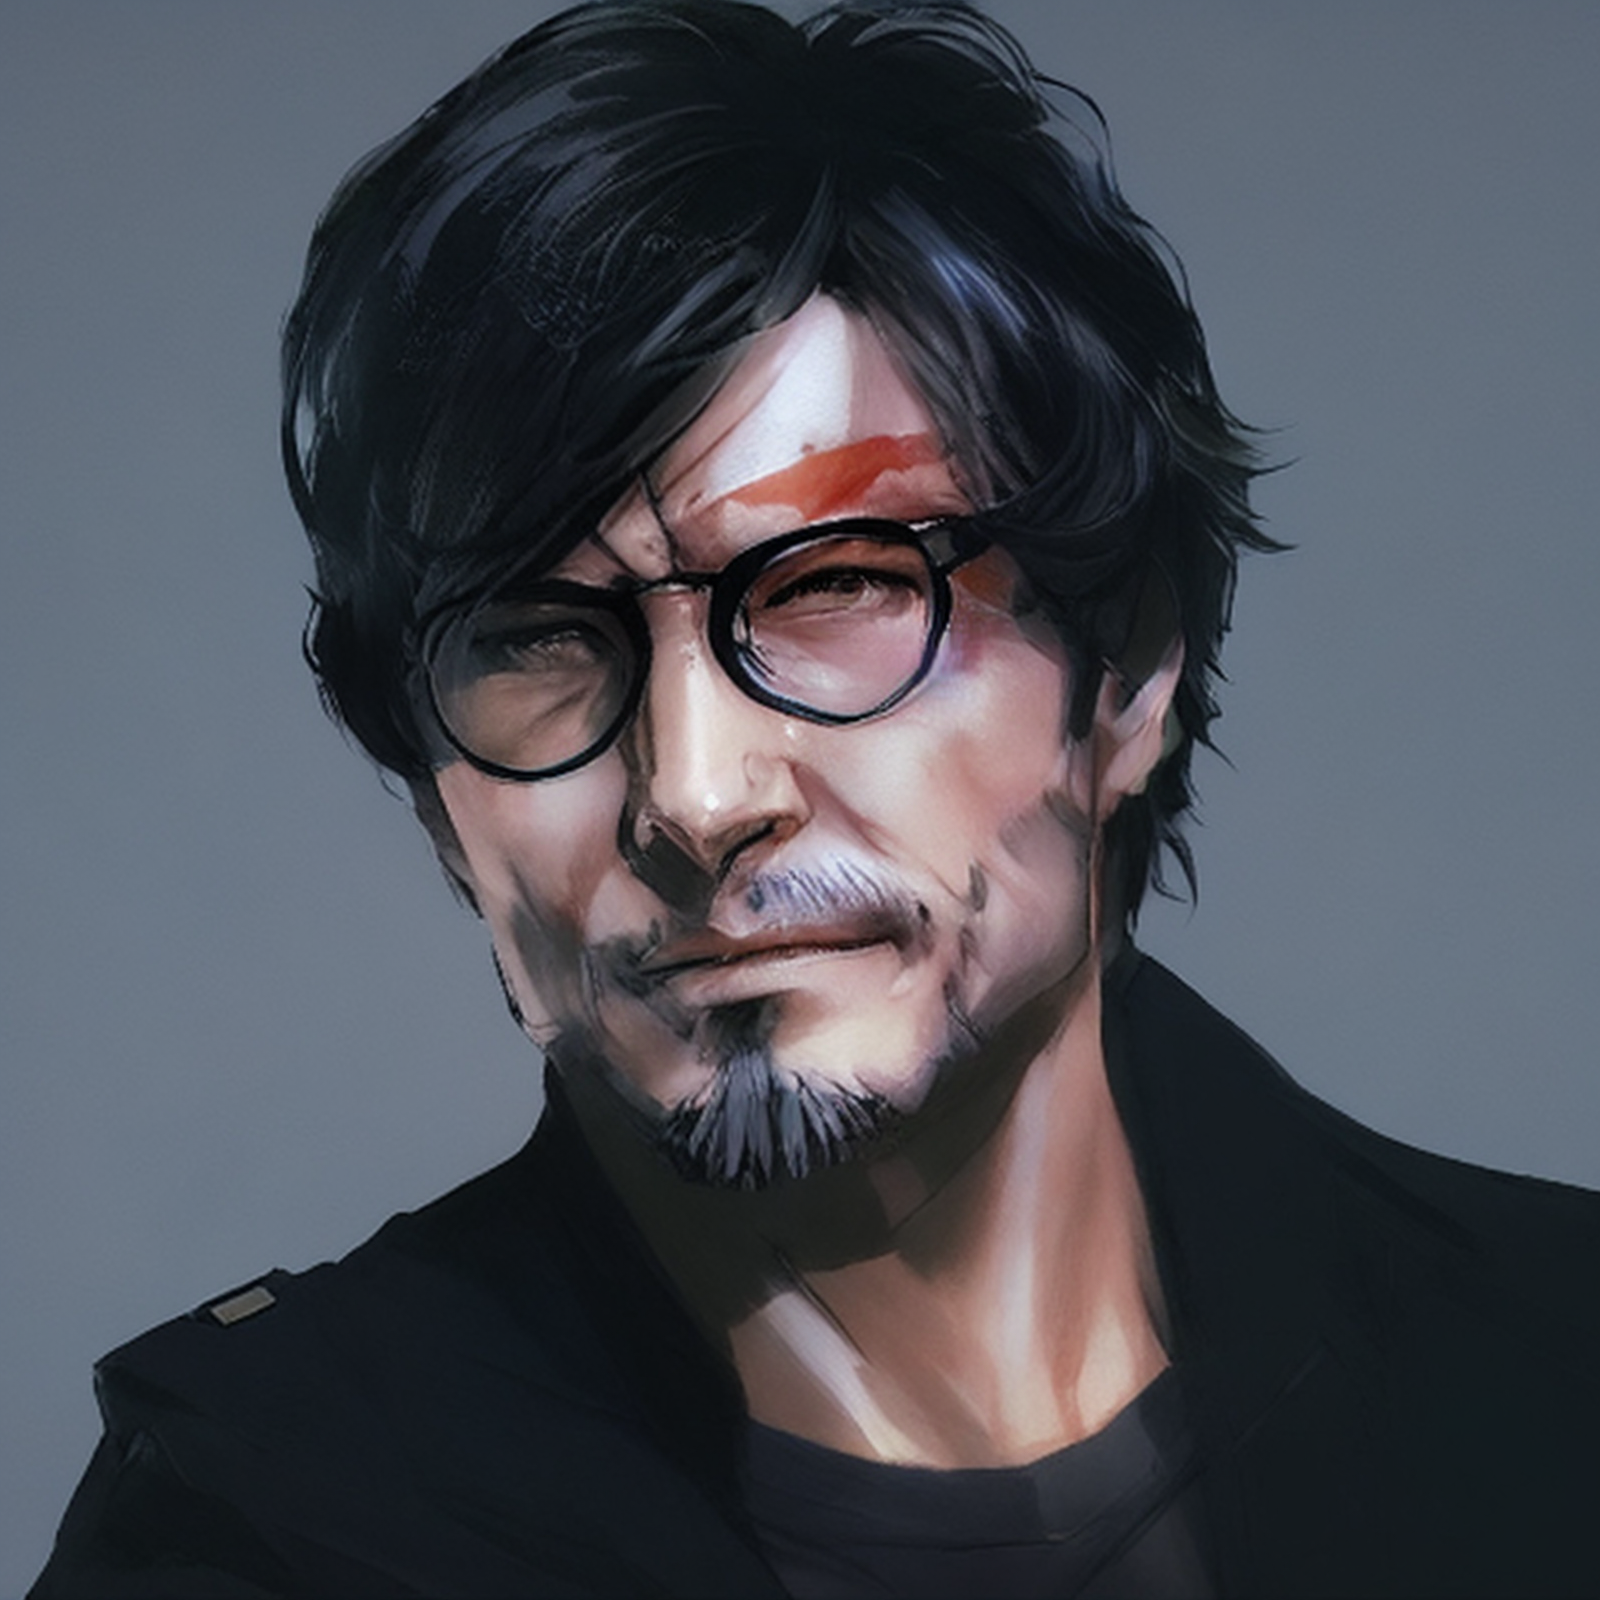 yoshin style, Hideo Kojima, glasses, smile, cyborg